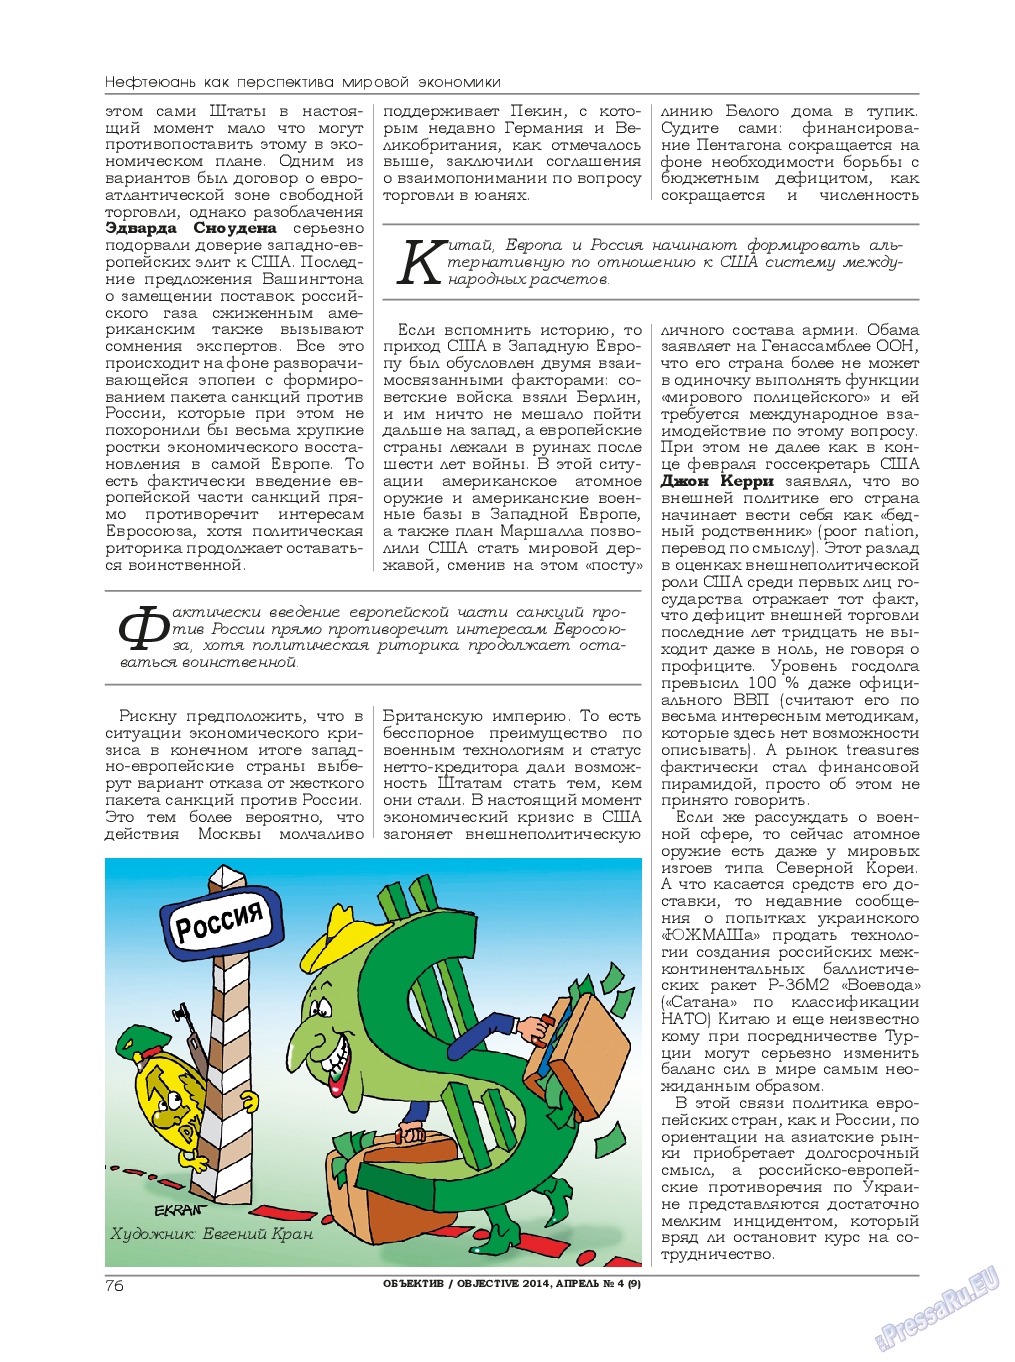 Объектив EU, журнал. 2014 №4 стр.76